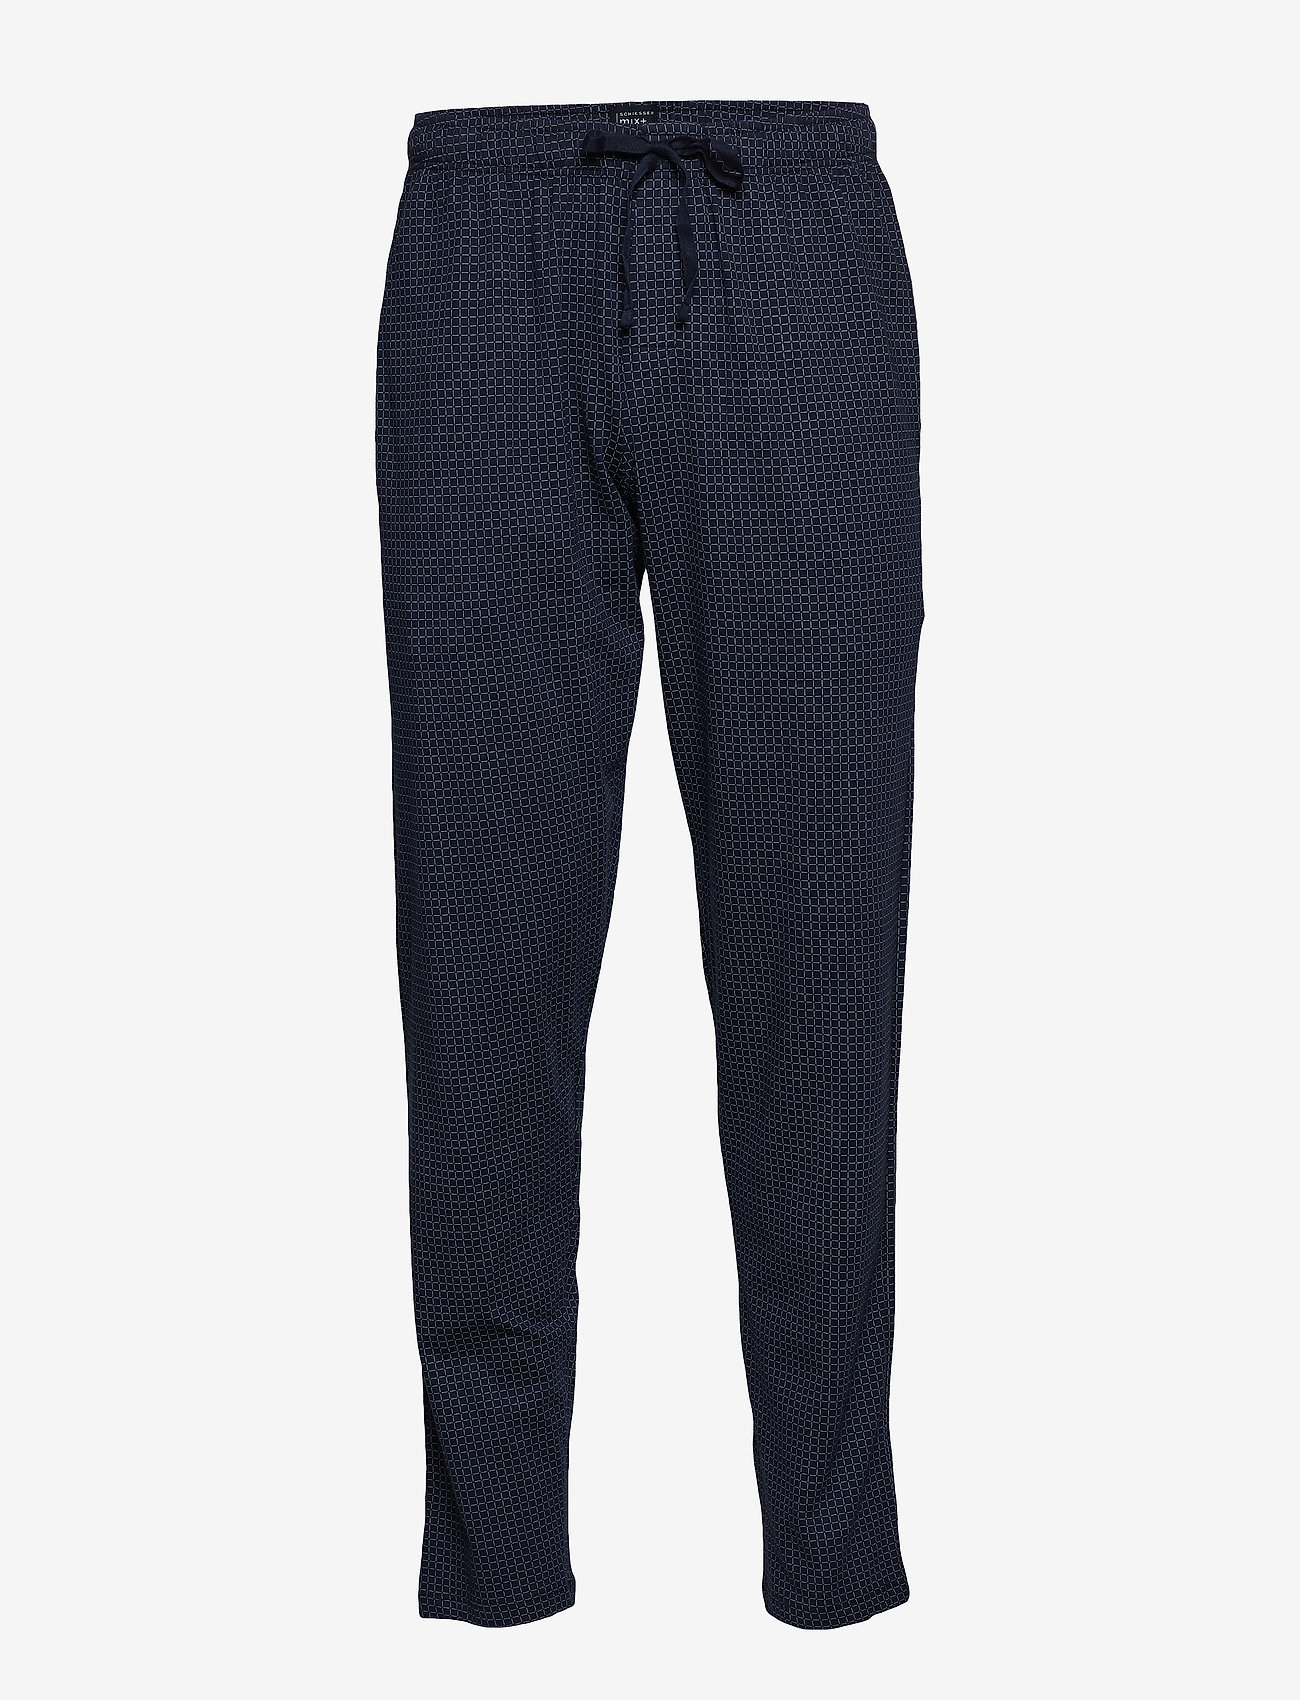 Schiesser - Long Pants - pyjamasnederdelar - dark blue - 0